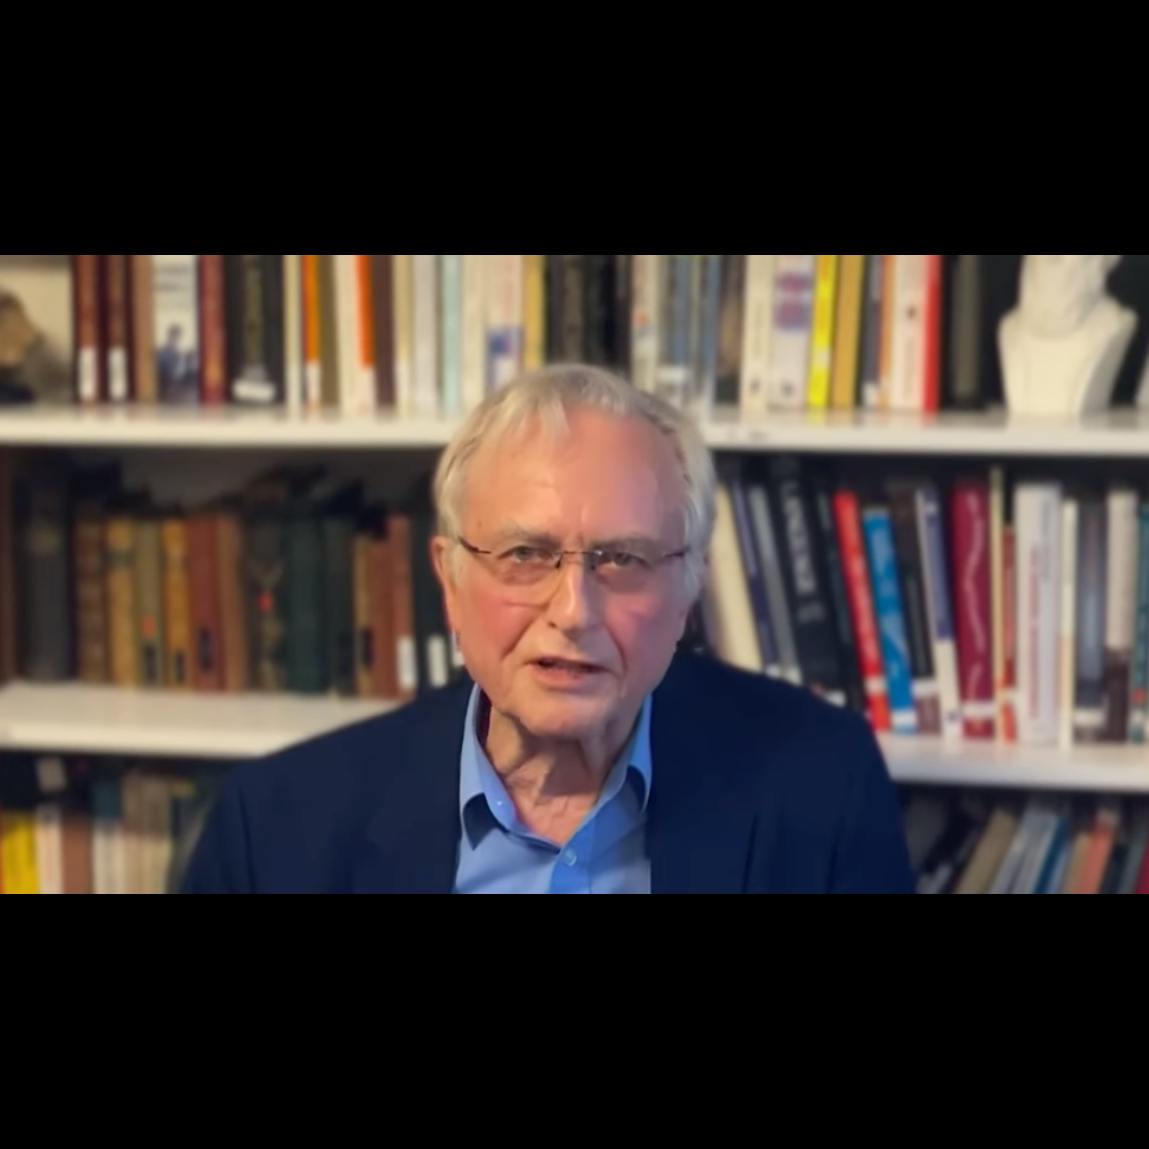 Ep. 525 - Richard Dawkins' Cultural Christianity Carelessness